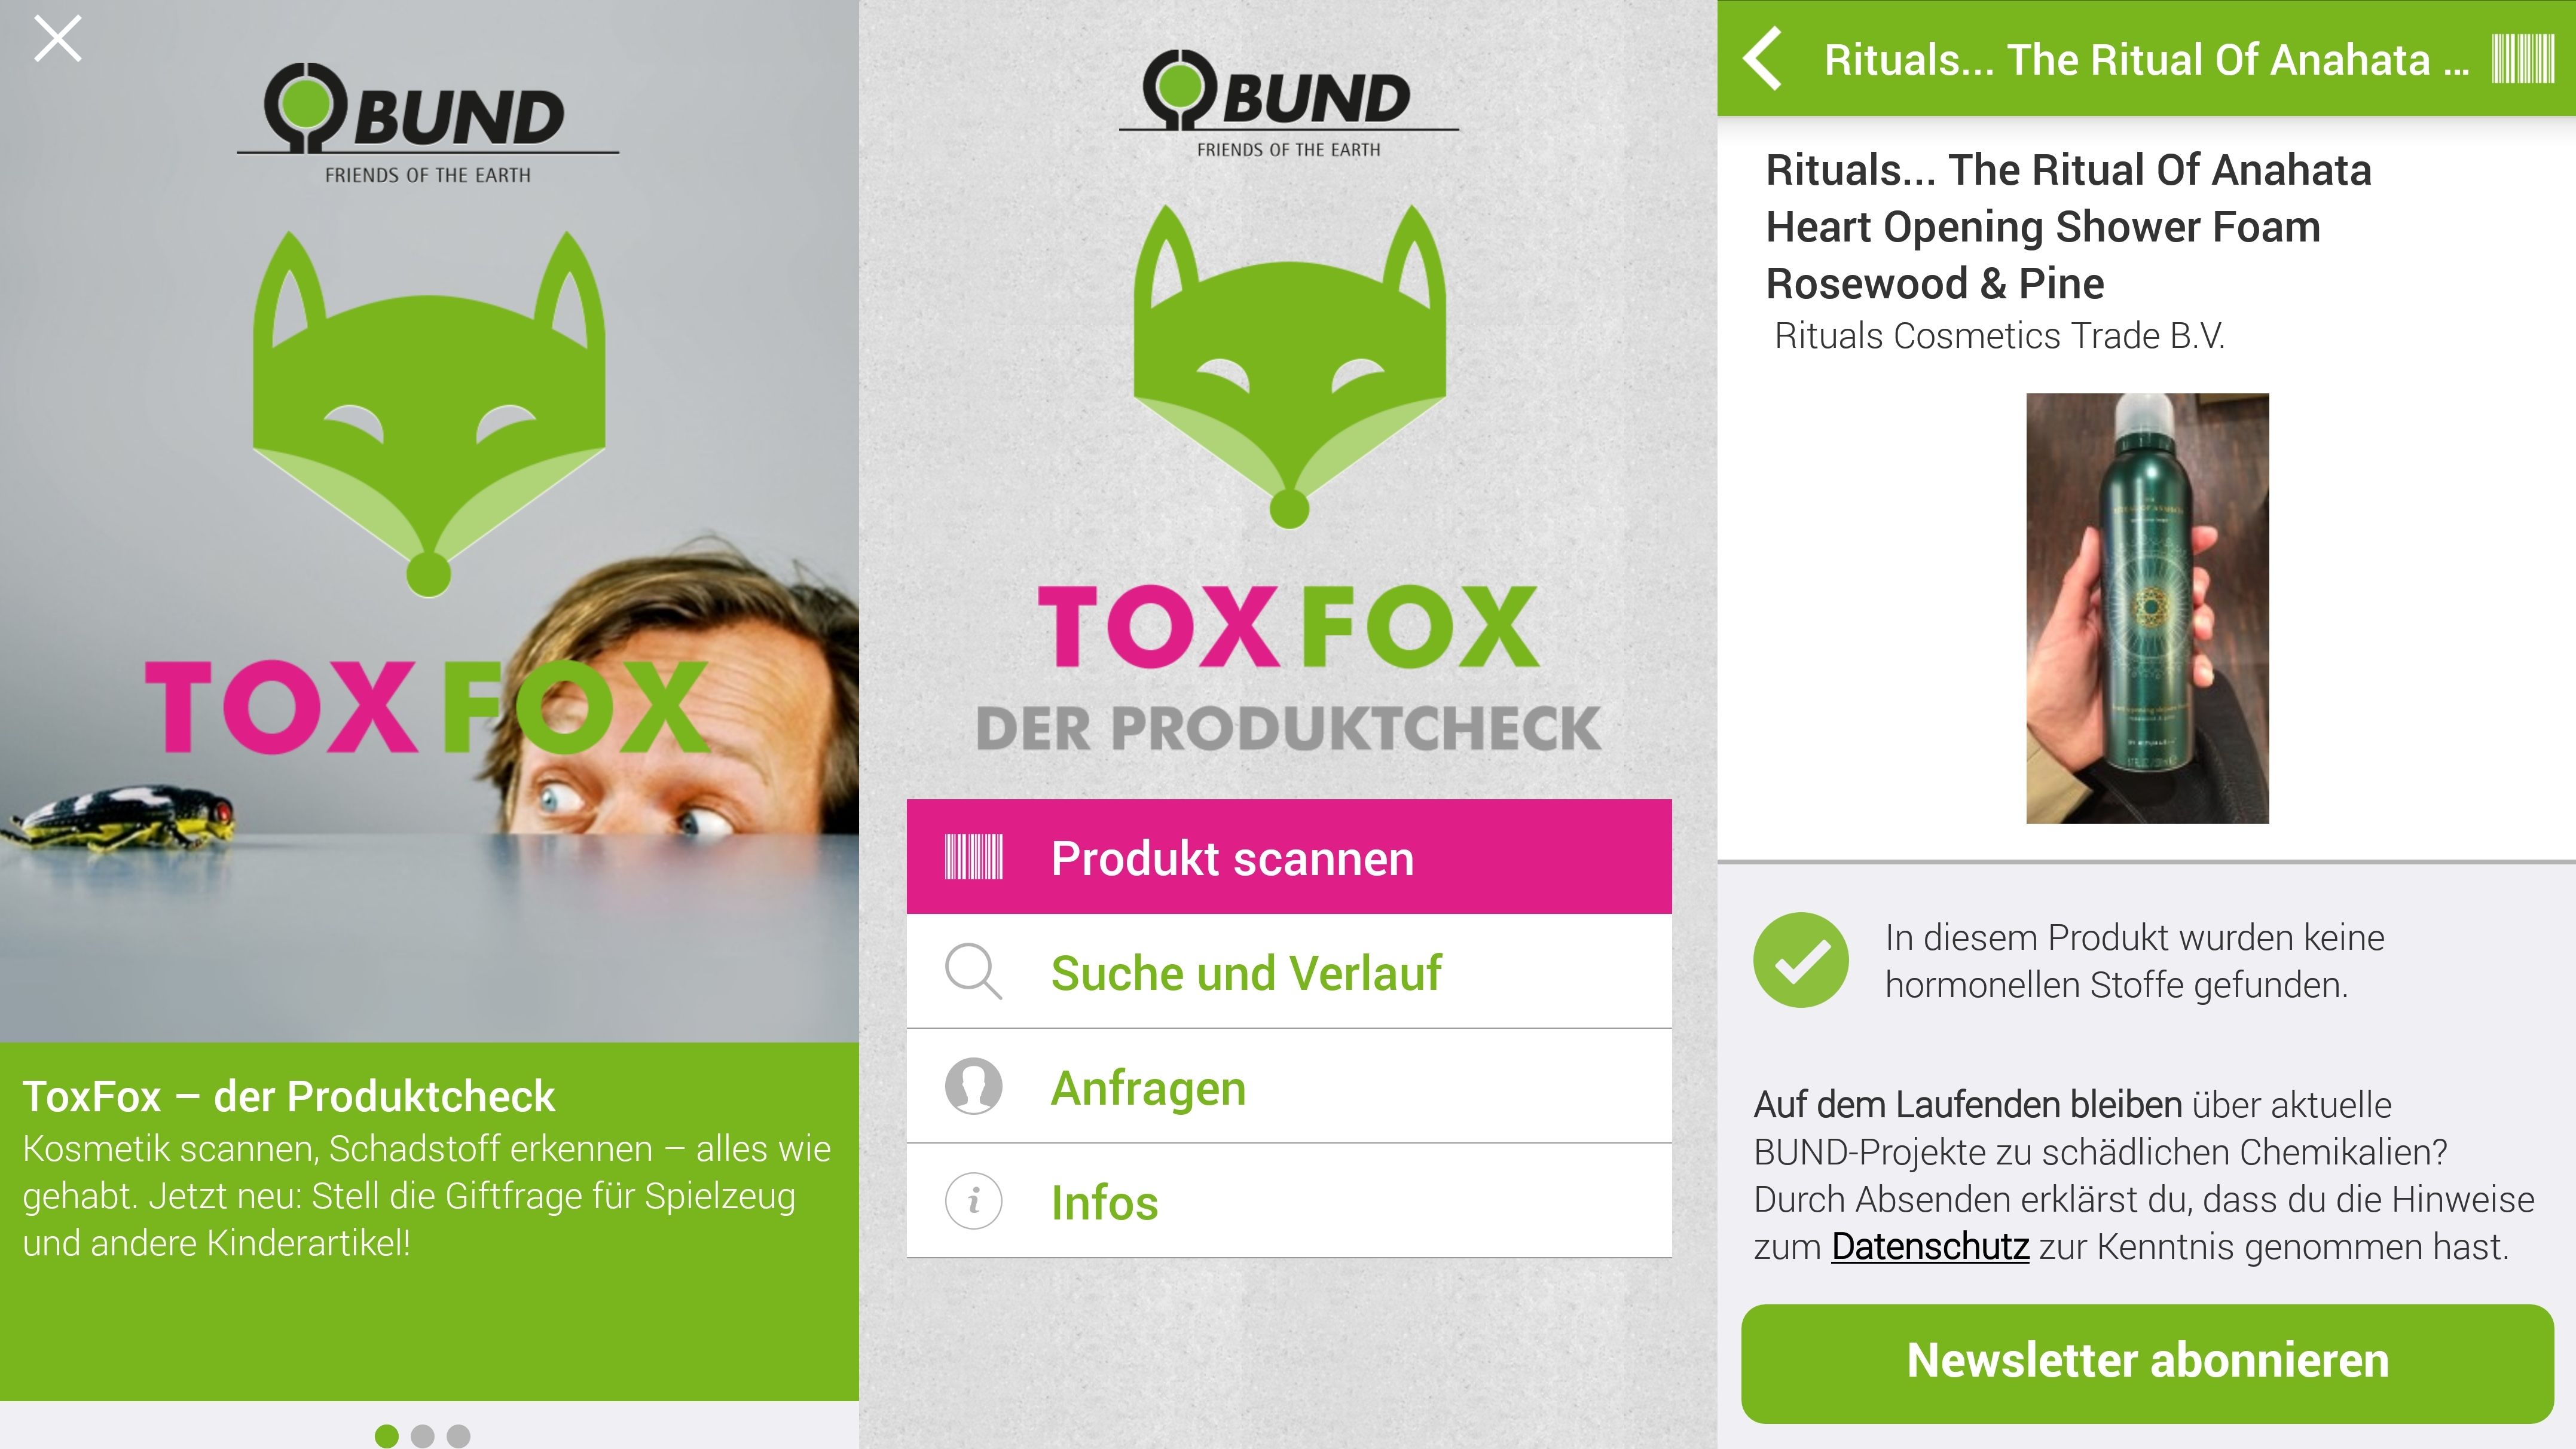 ToxFox